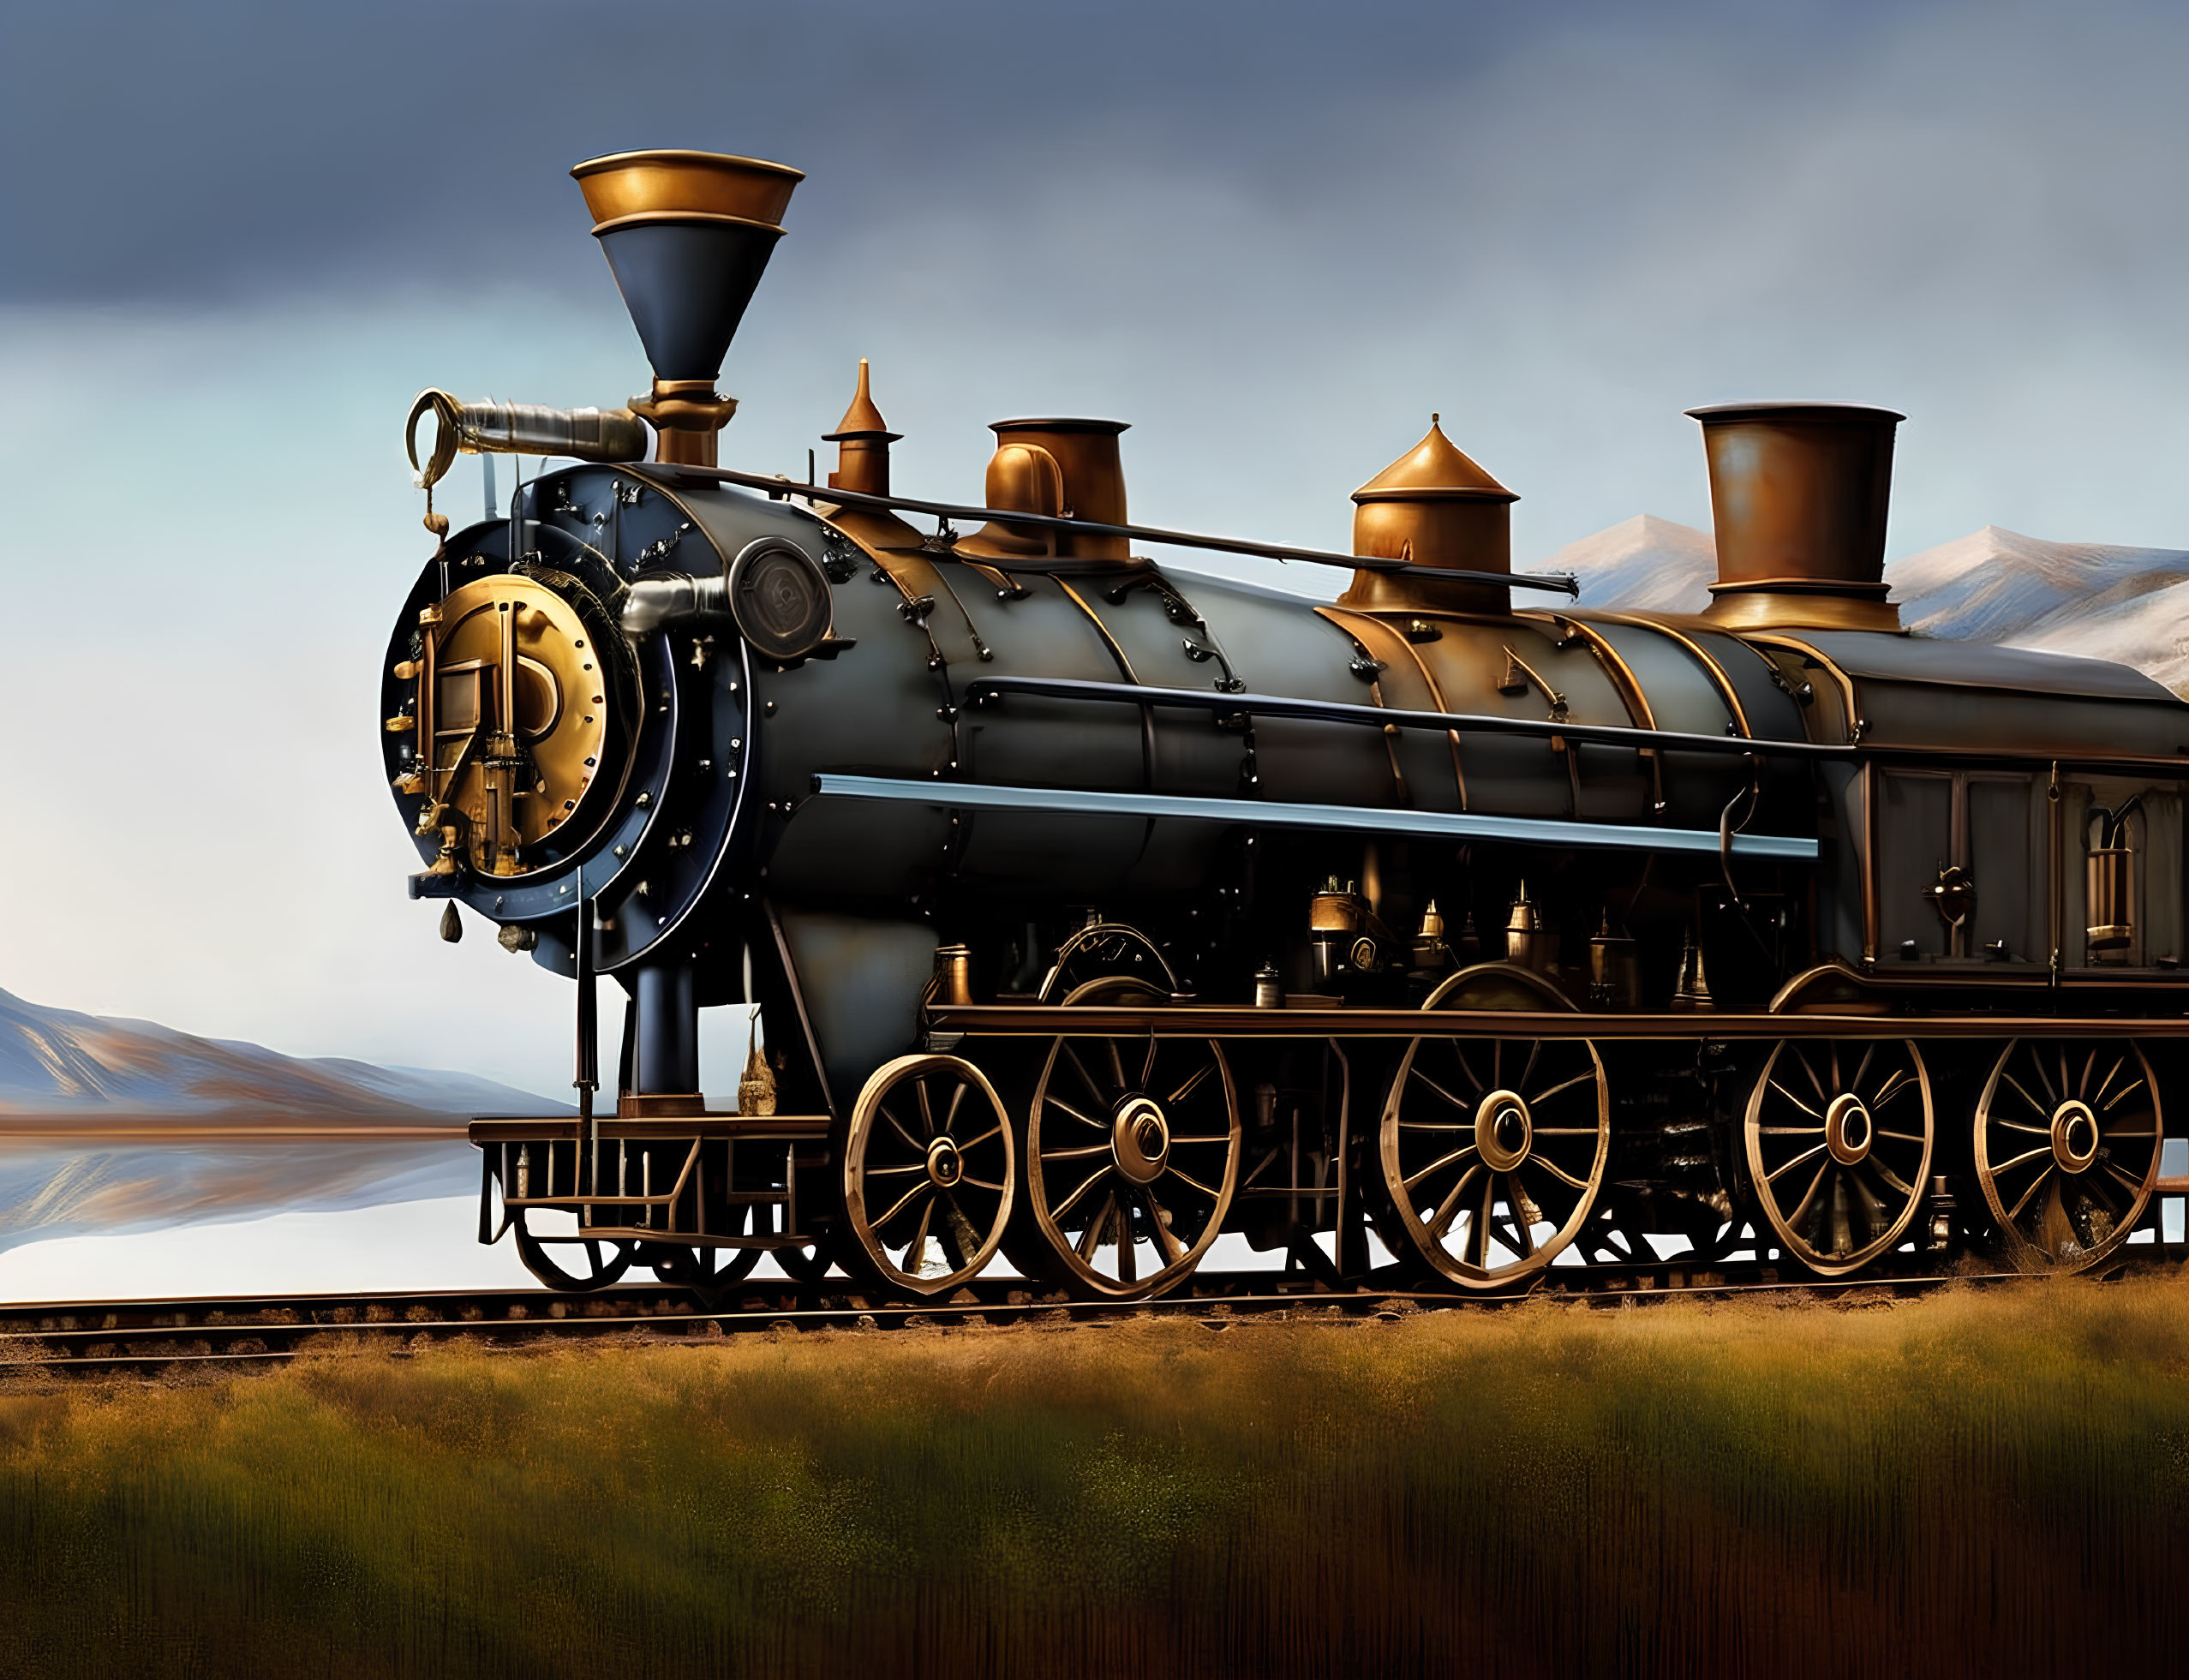 Vintage Black Steam Locomotive with Golden Accents on Railway in Barren Landscape